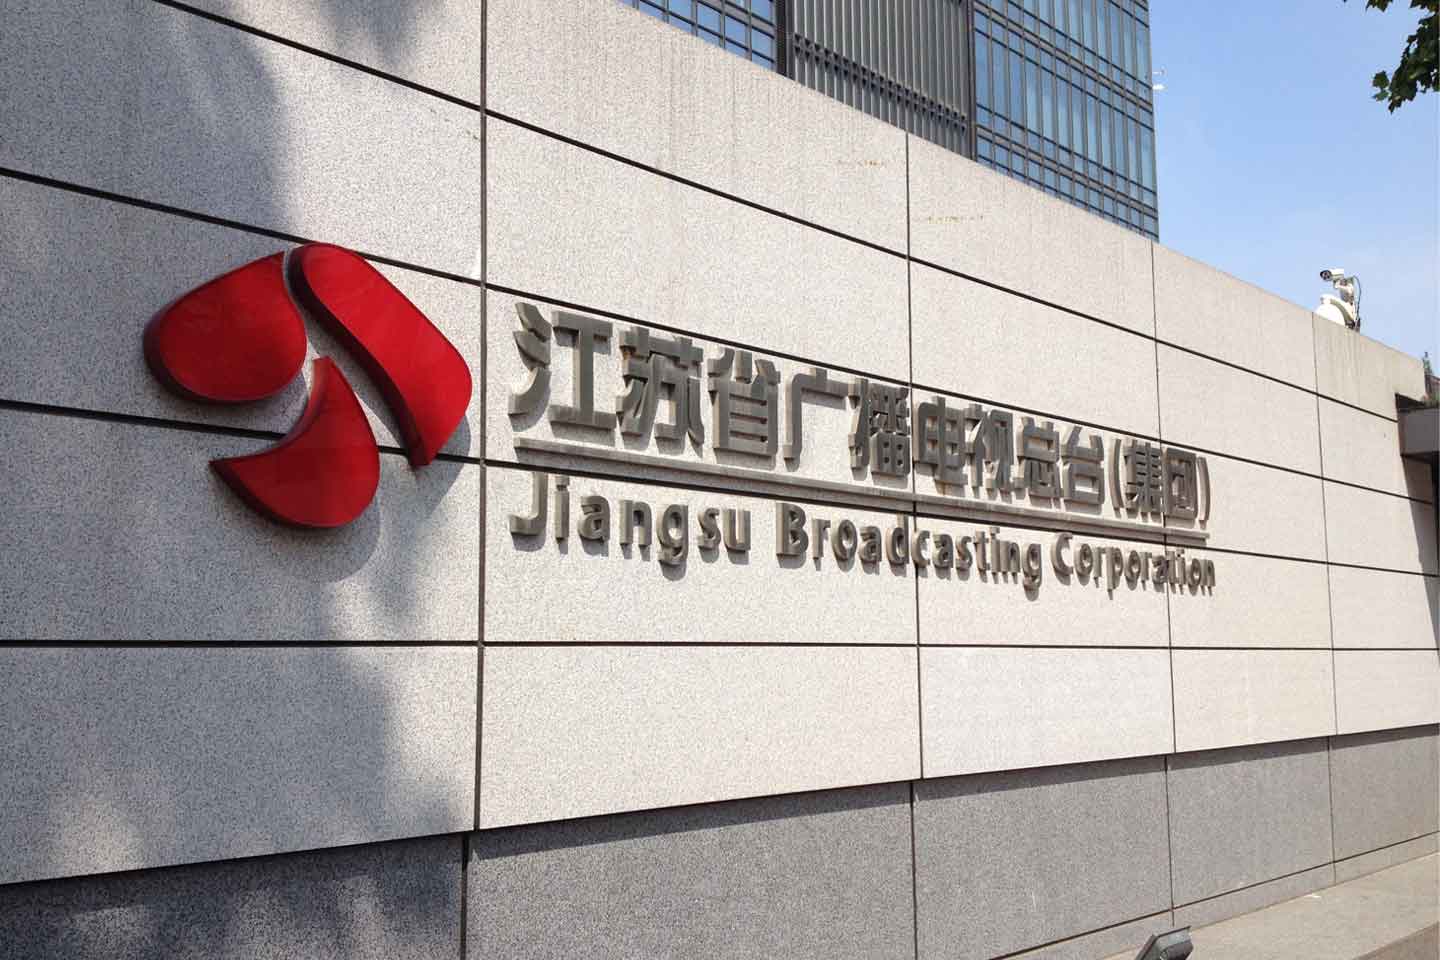 Jiangsu Broadcasting Corporation